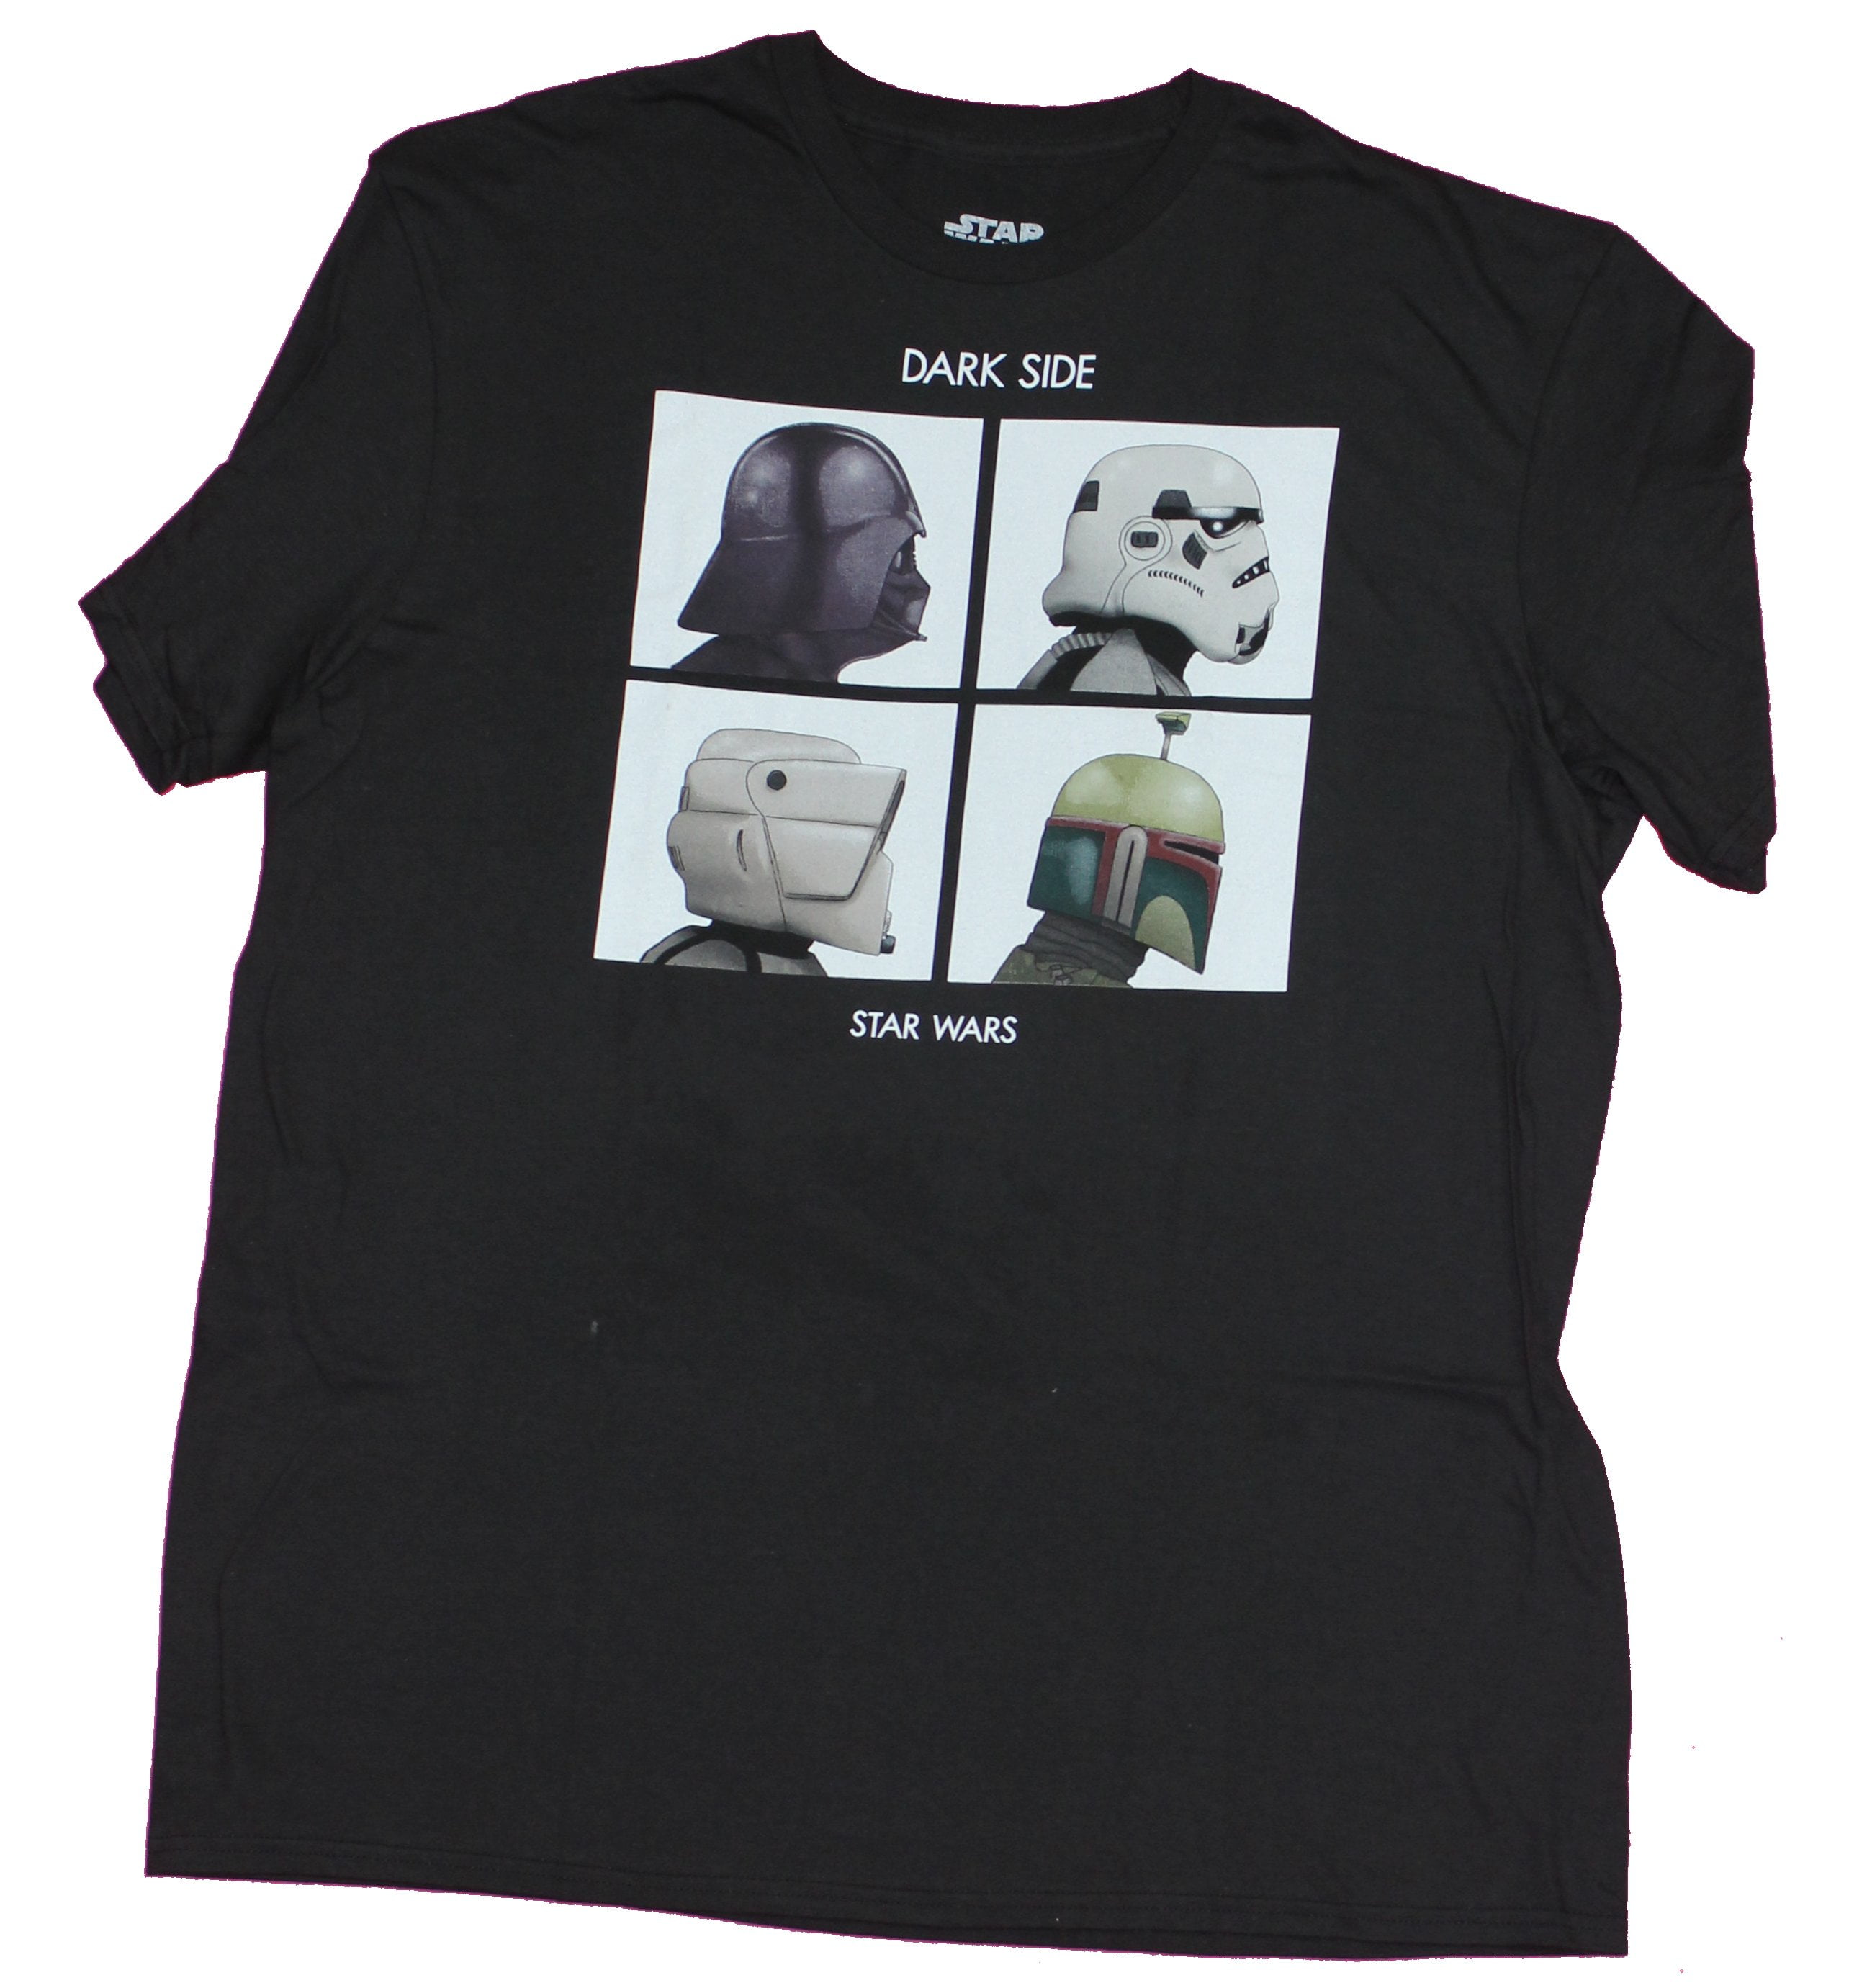 Black Star Wars Jeep Graphic T-Shirt. Distressed